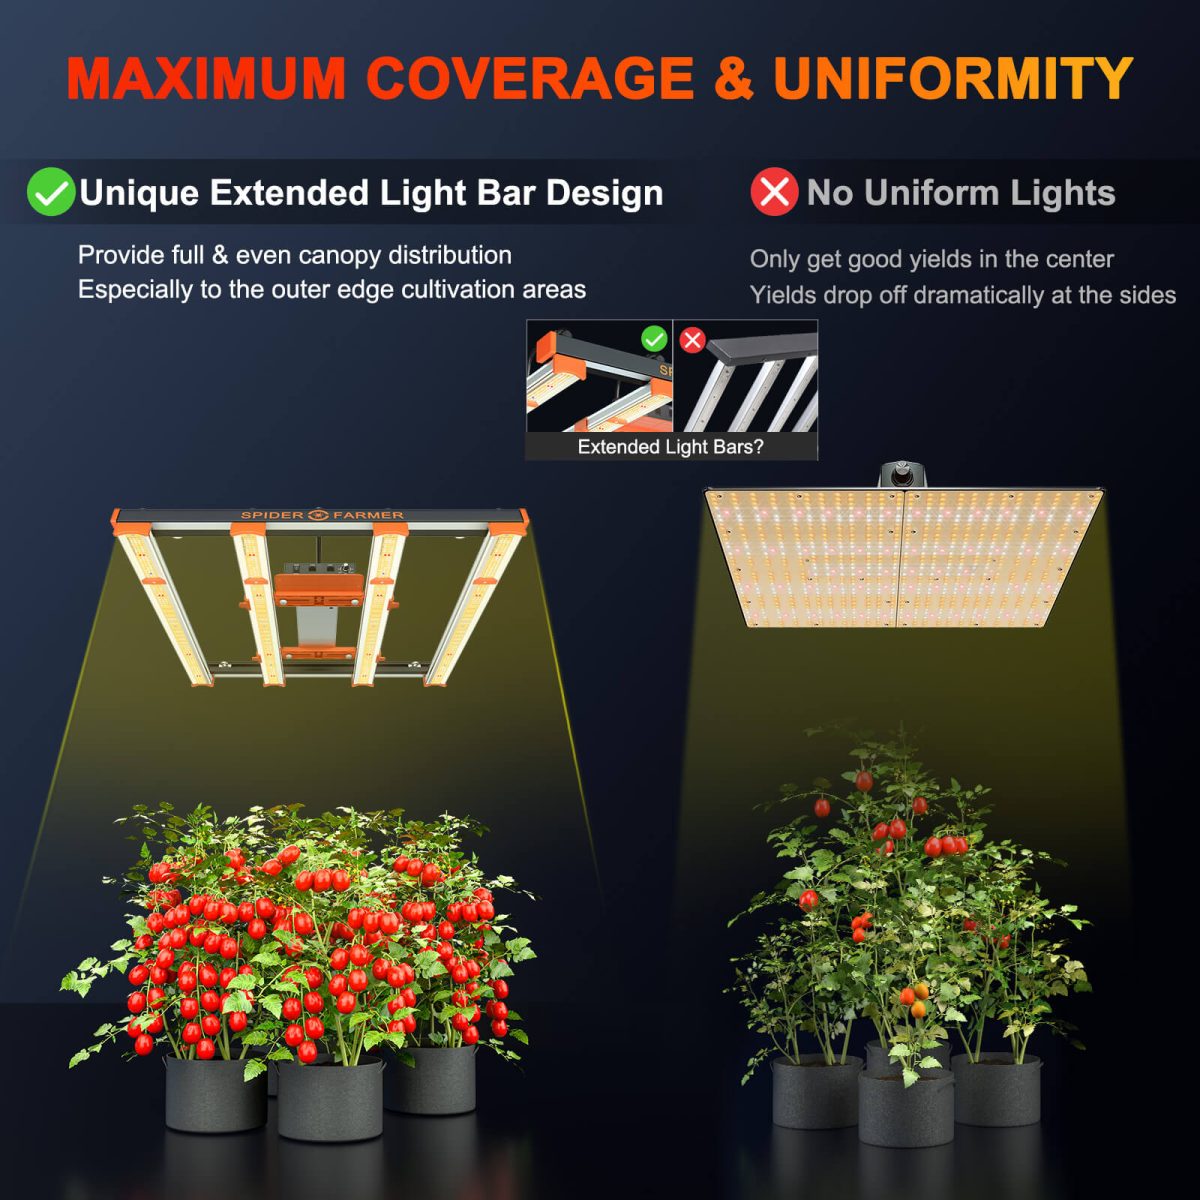 Coverage of SE3000 LED Grow light